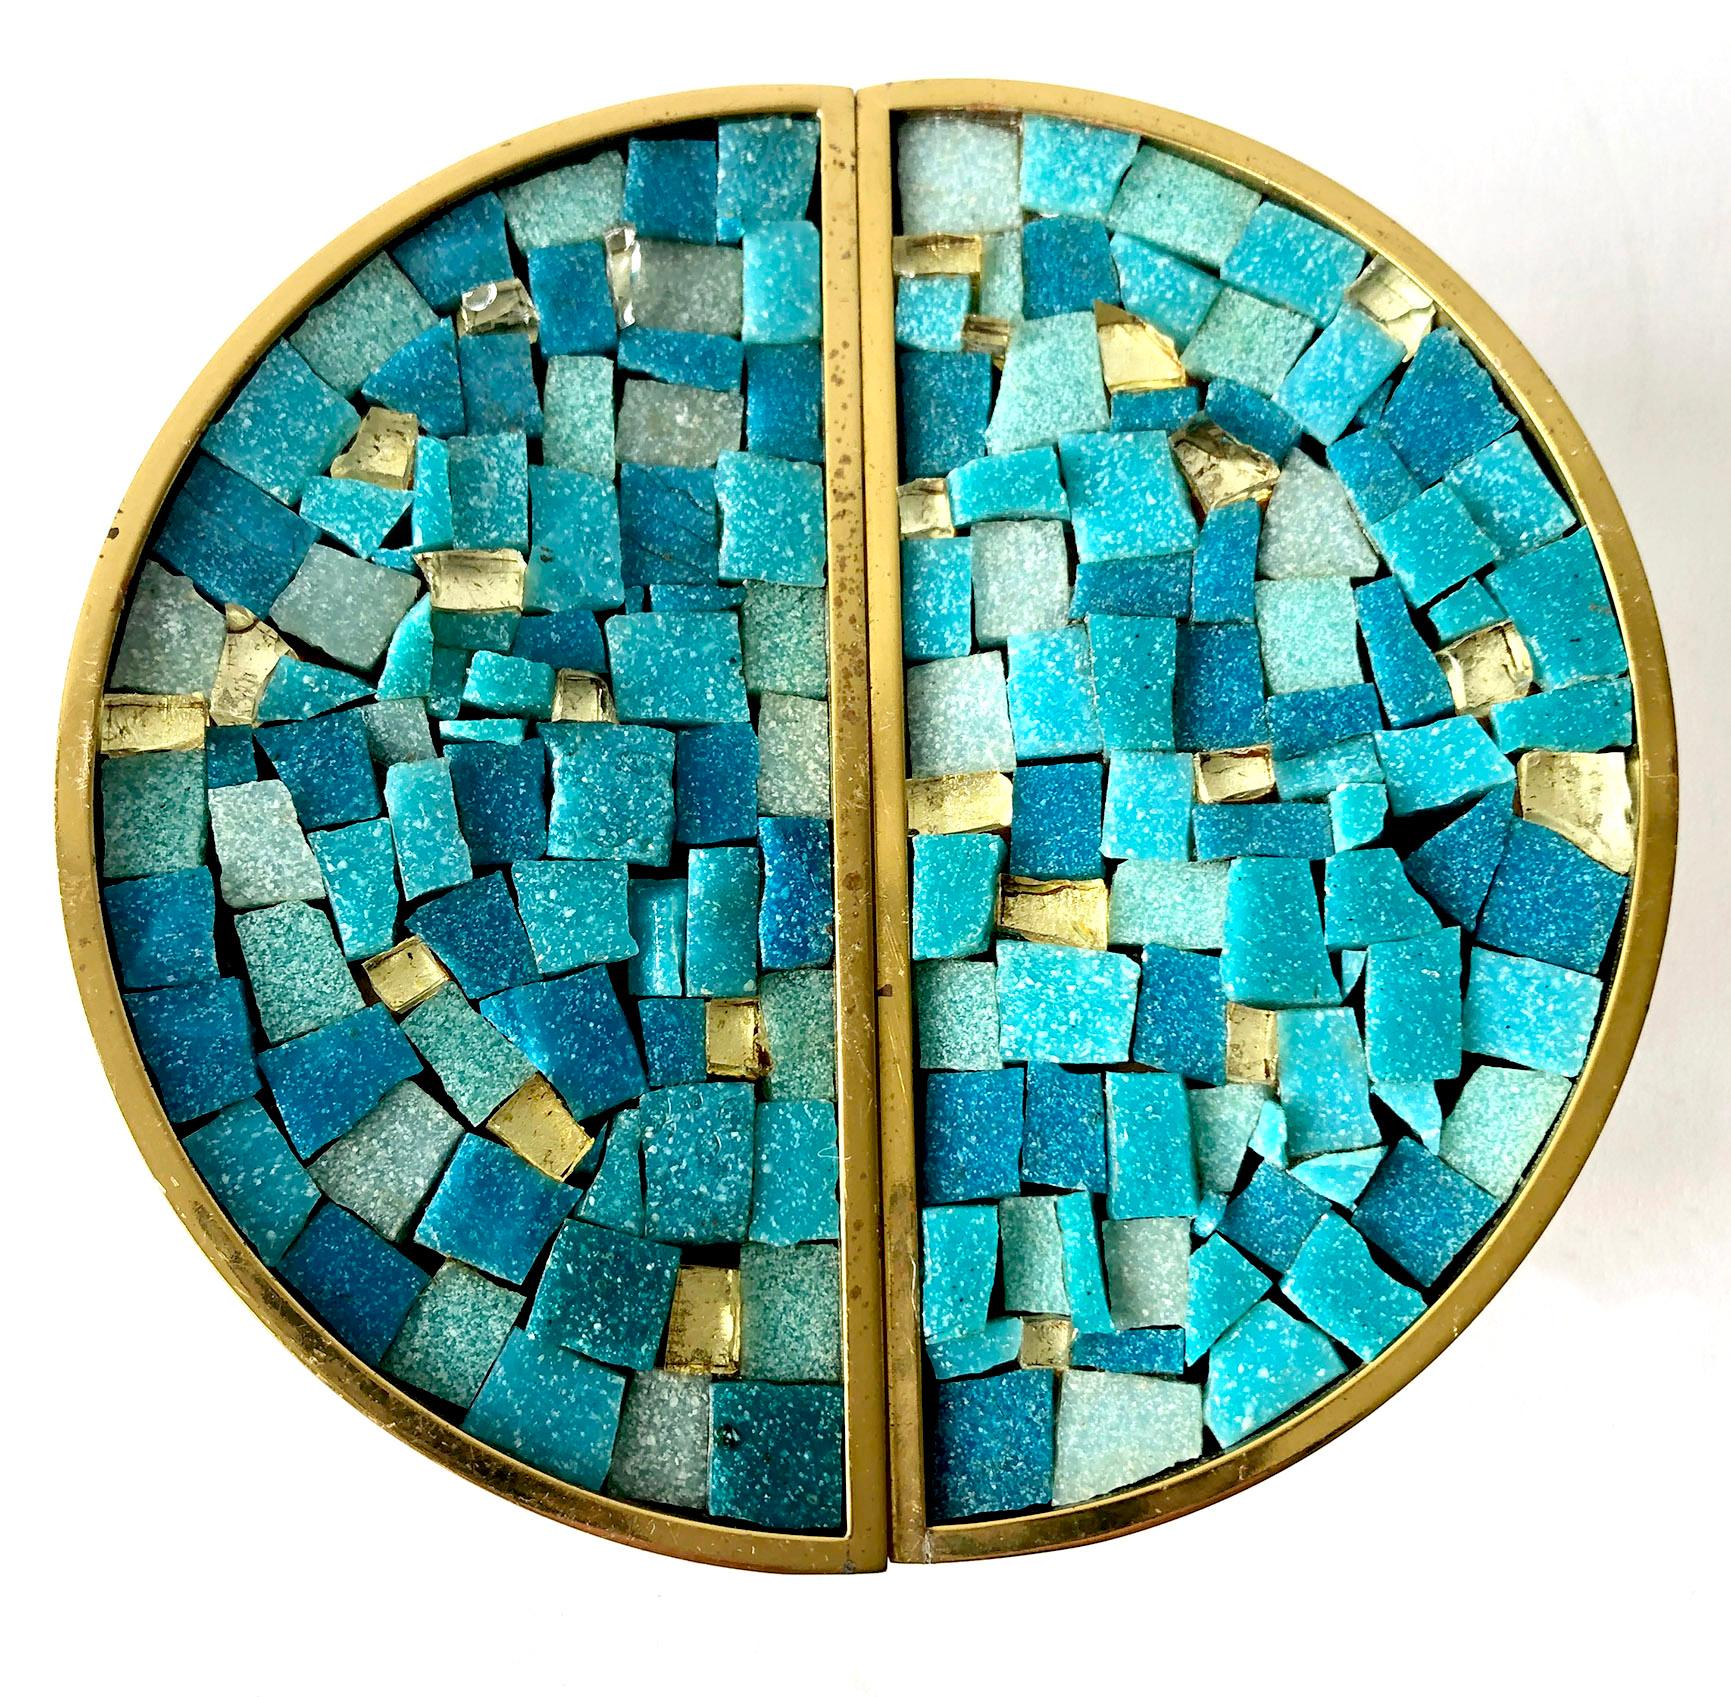 Italian glass mosaic tile door pulls measure 5